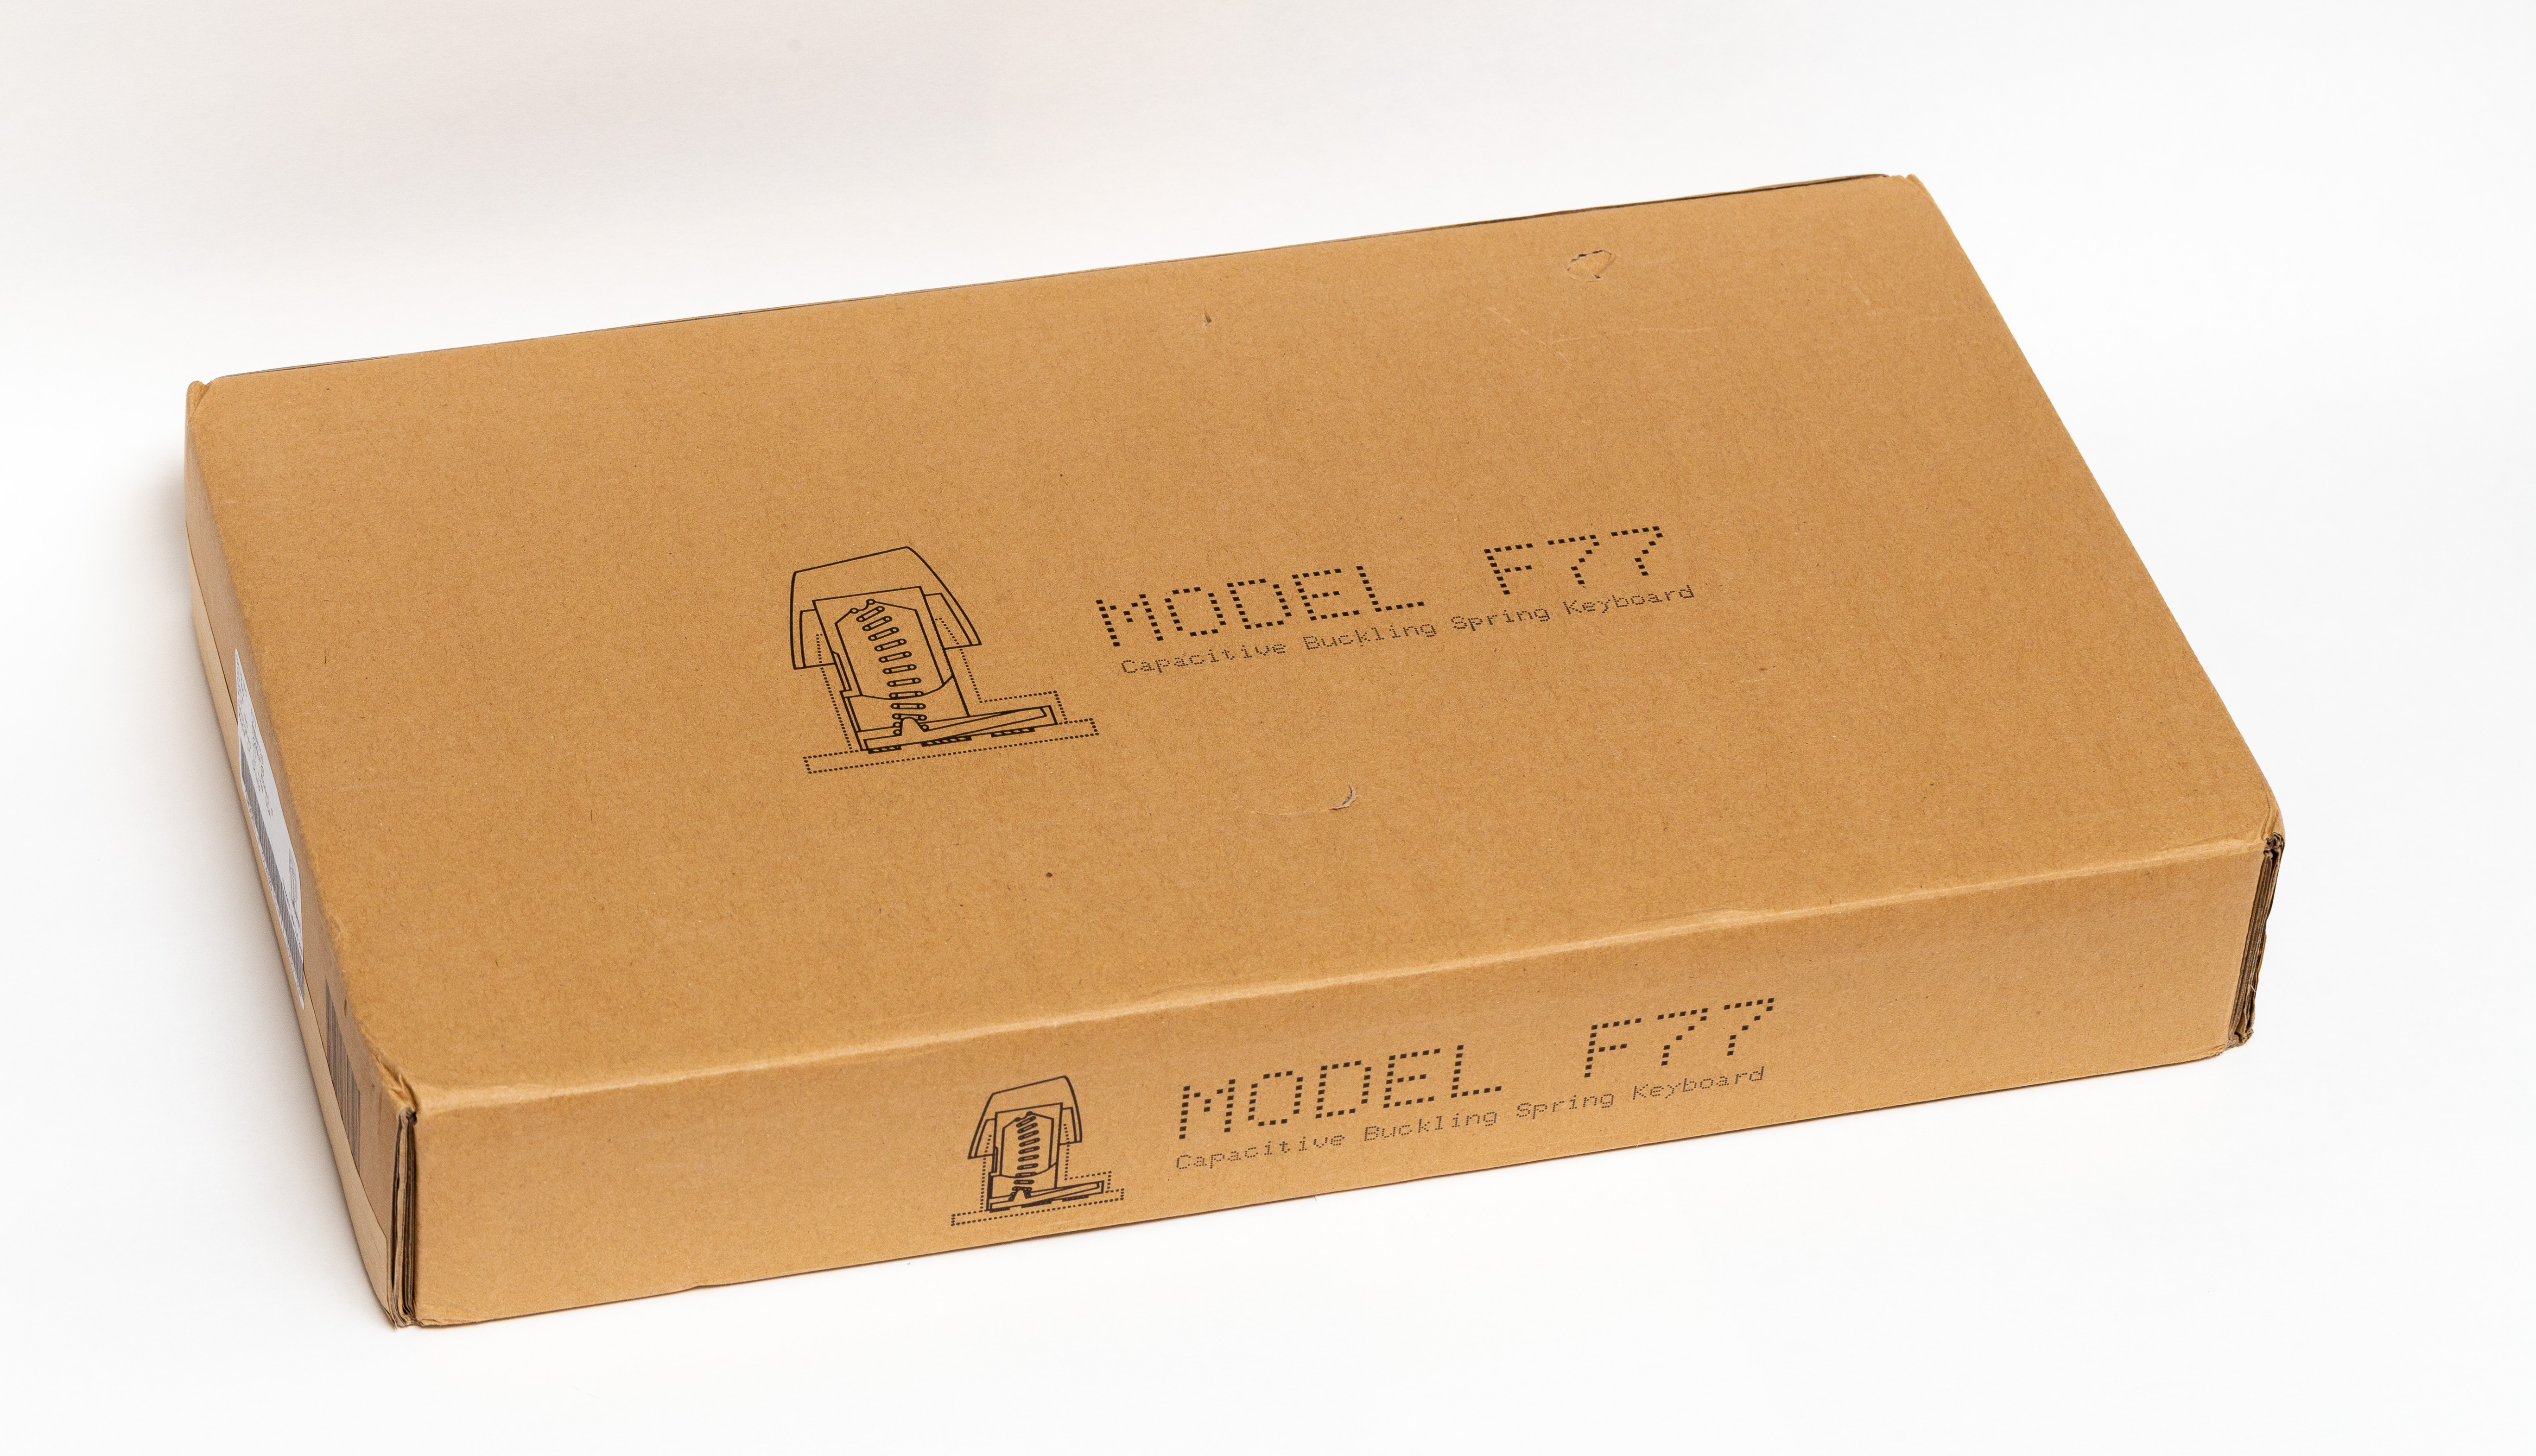 Model F77 box